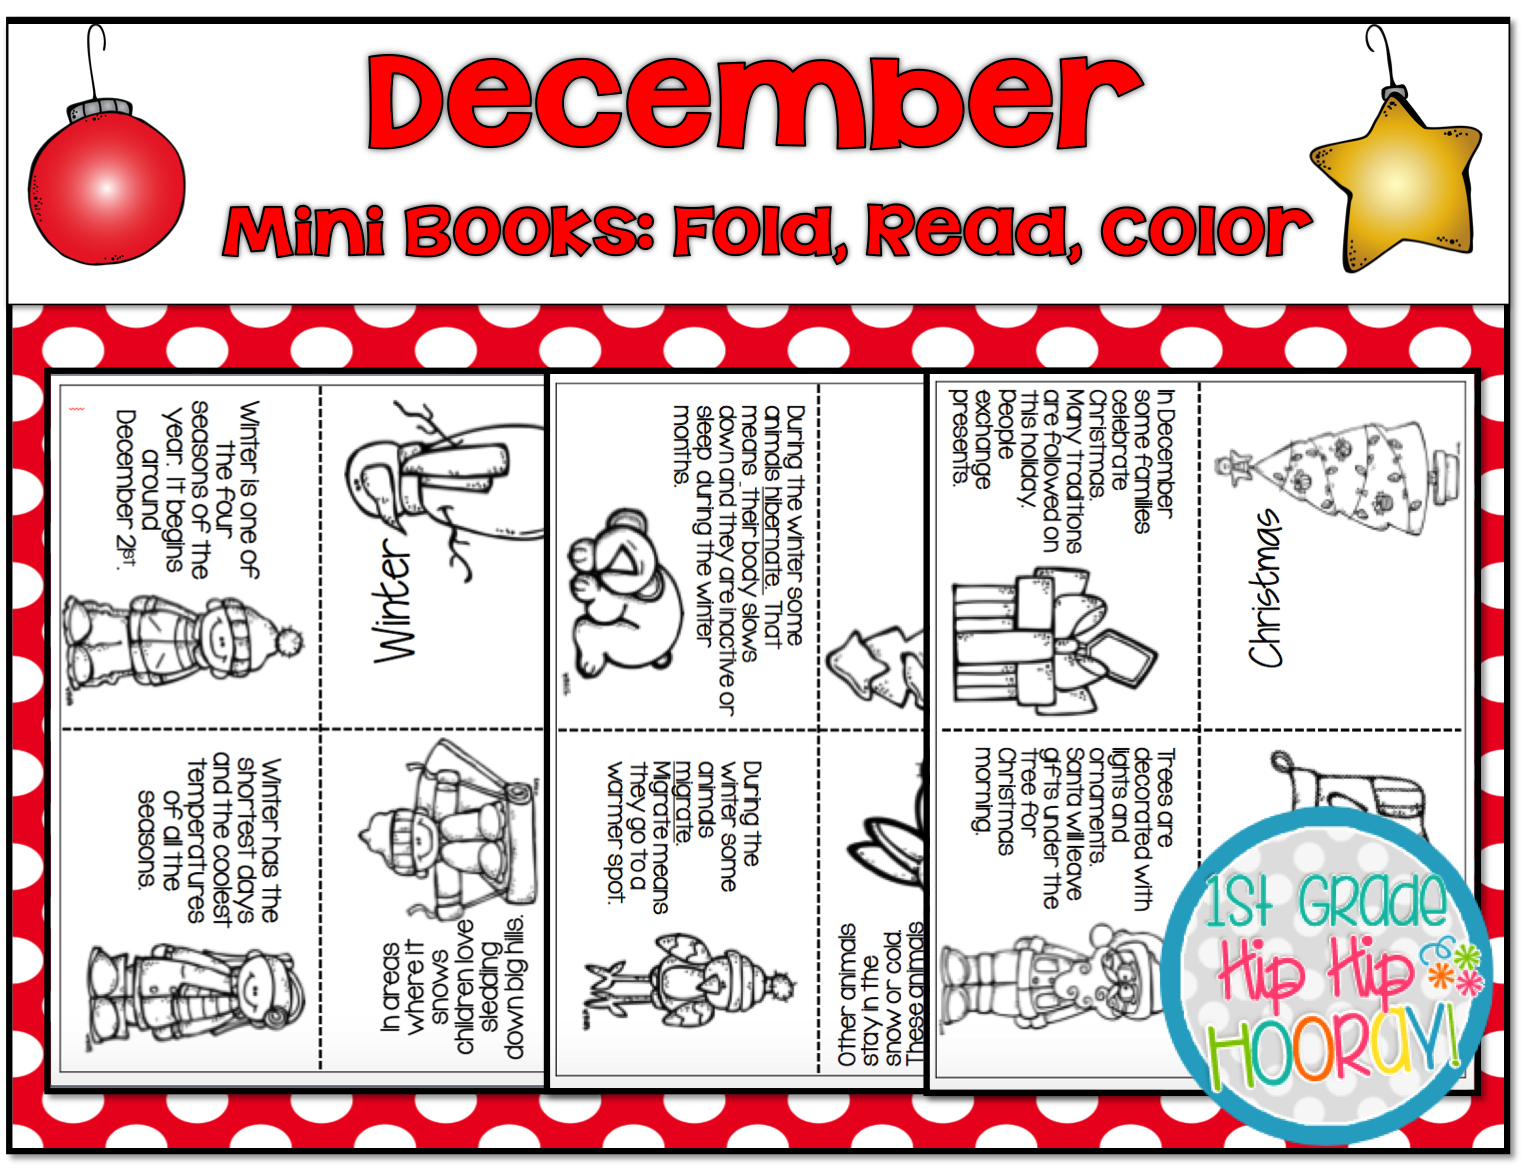 1st-grade-hip-hip-hooray-december-mini-book-print-fold-read